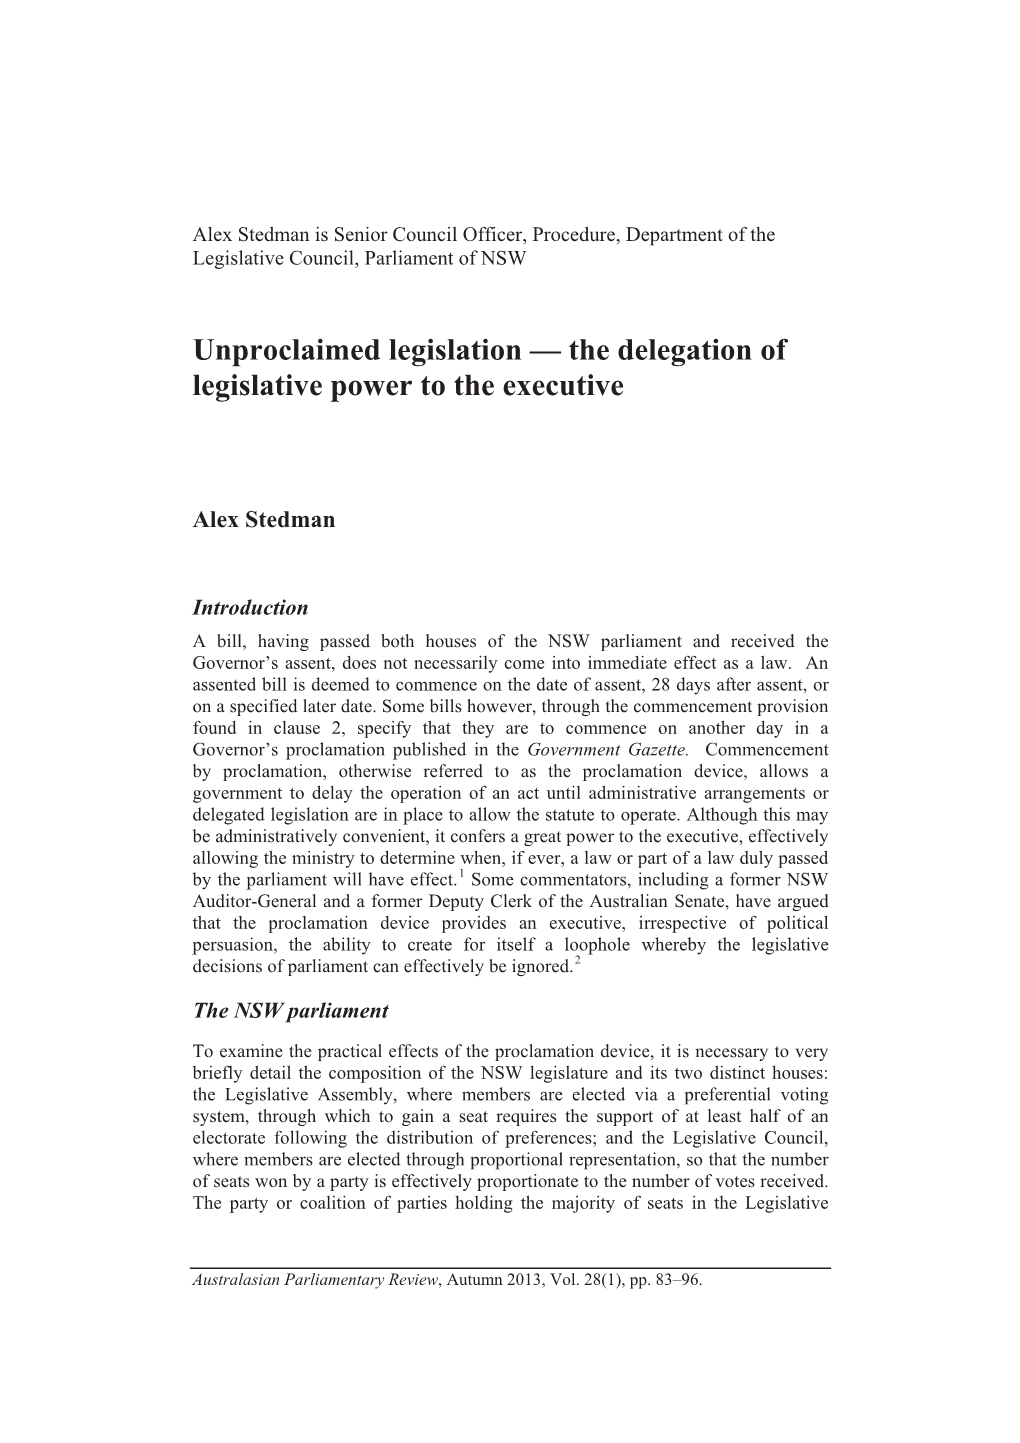 Unproclaimed Legislation — the Delegation of Legislative Power to the Executive